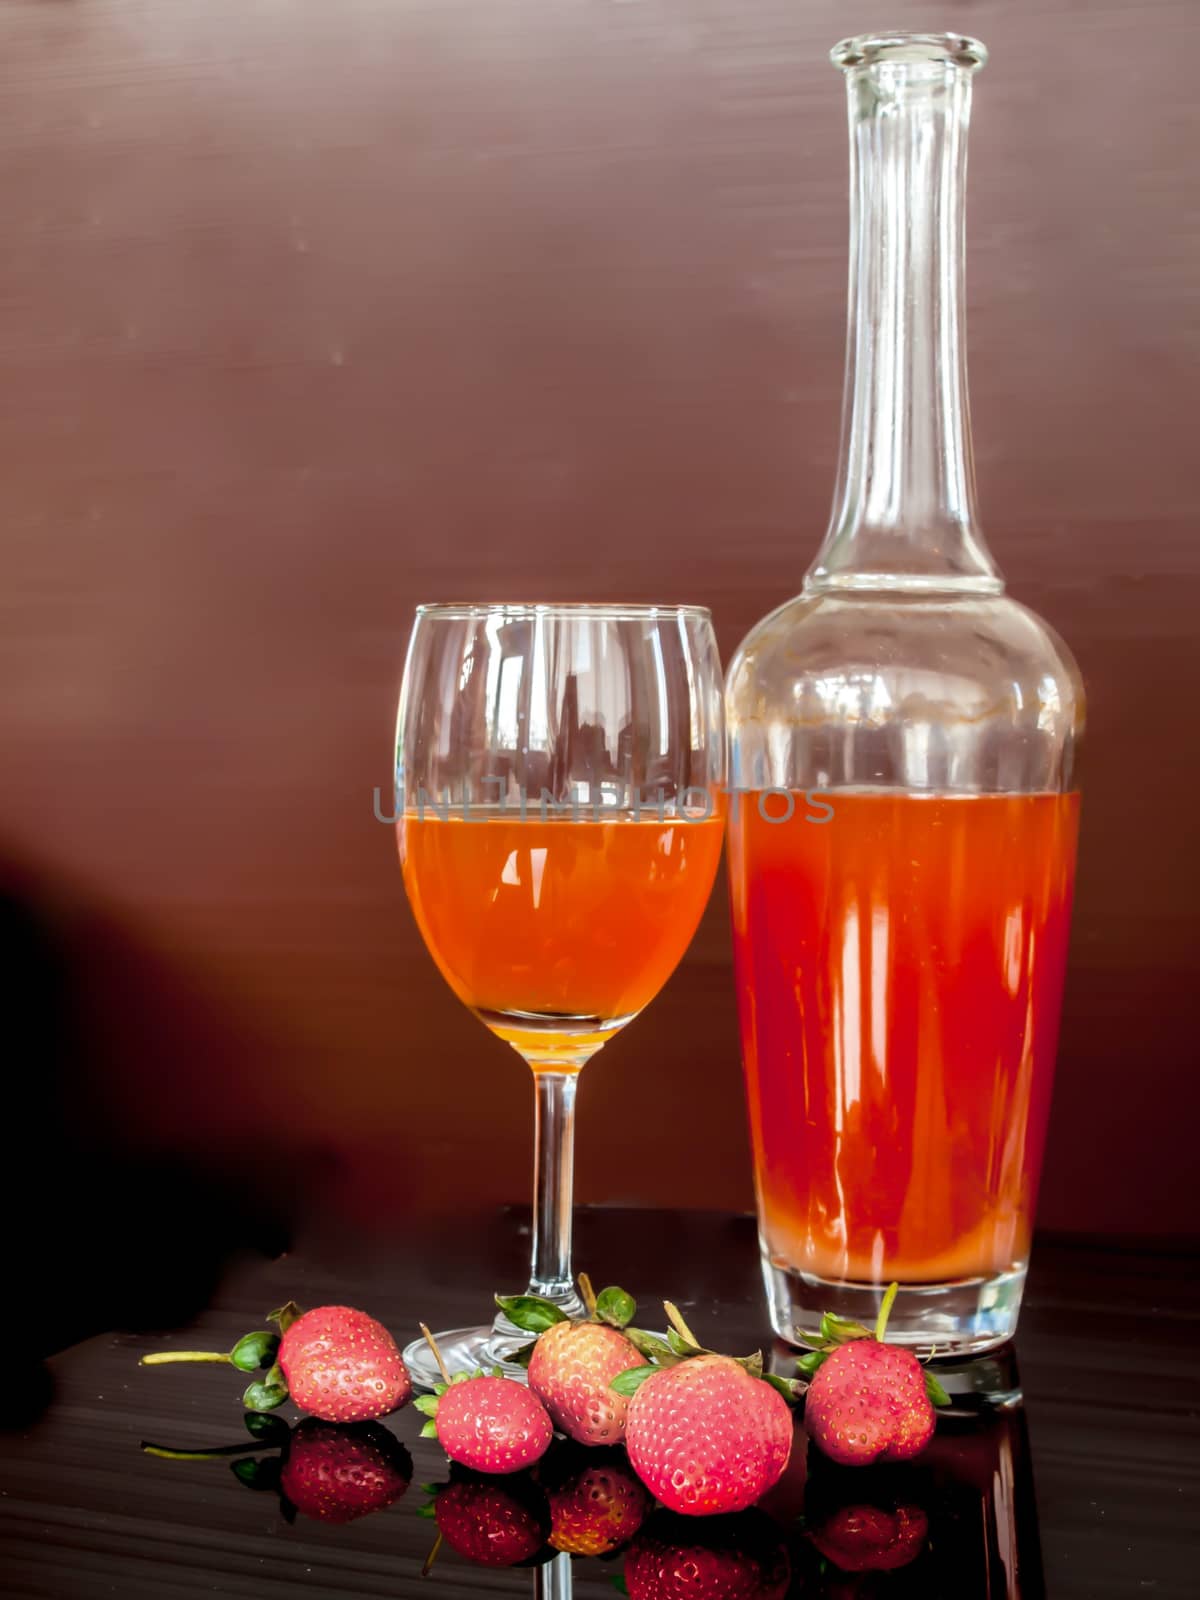 Strawberries and wine by wmitrmatr